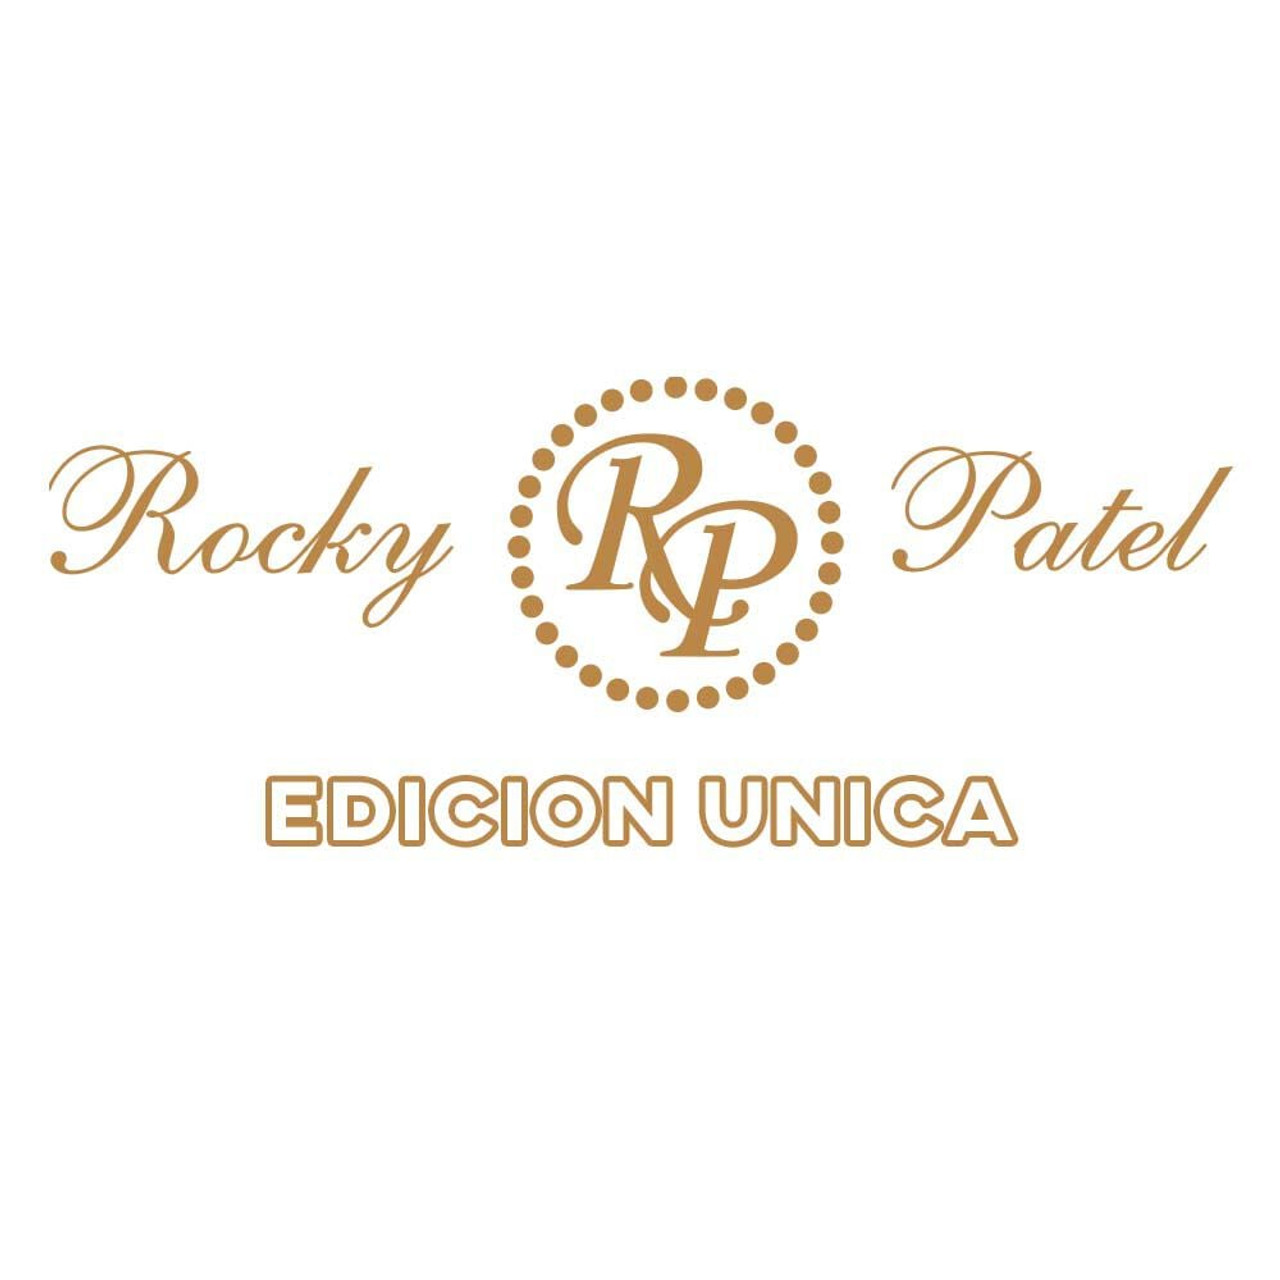 Rocky Patel Edicion Unica Logo